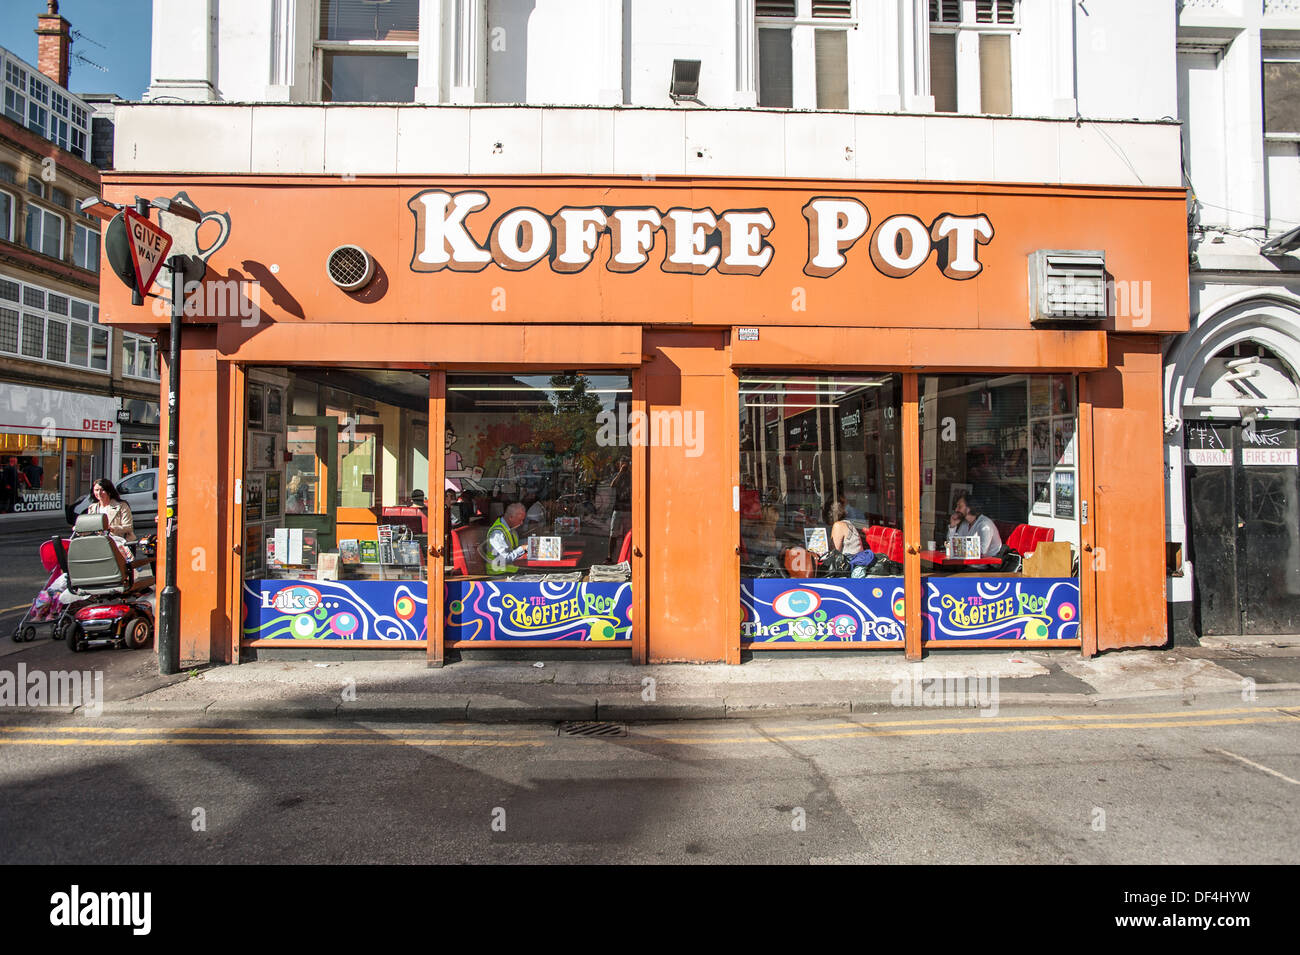 Koffee Pot. Manchester. Stock Photo